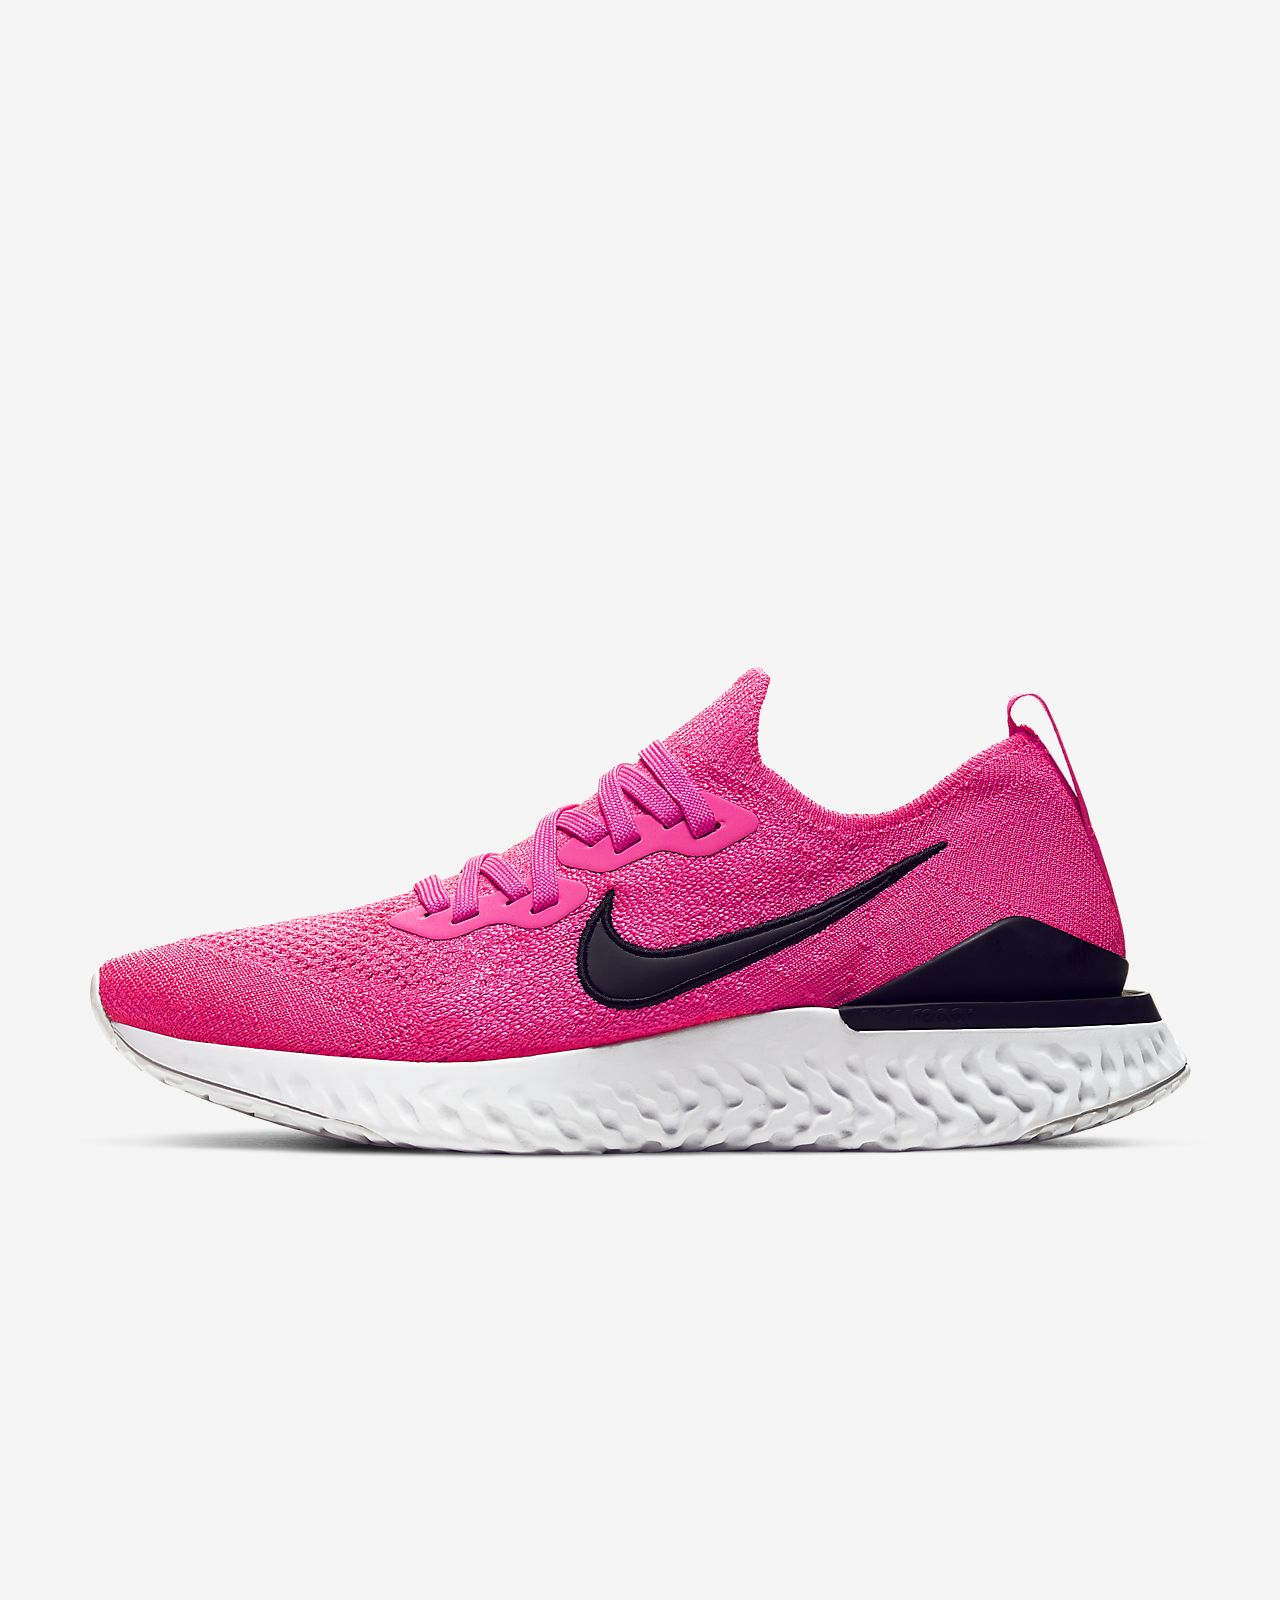 nike epic react flyknit pearl pink women's running shoe